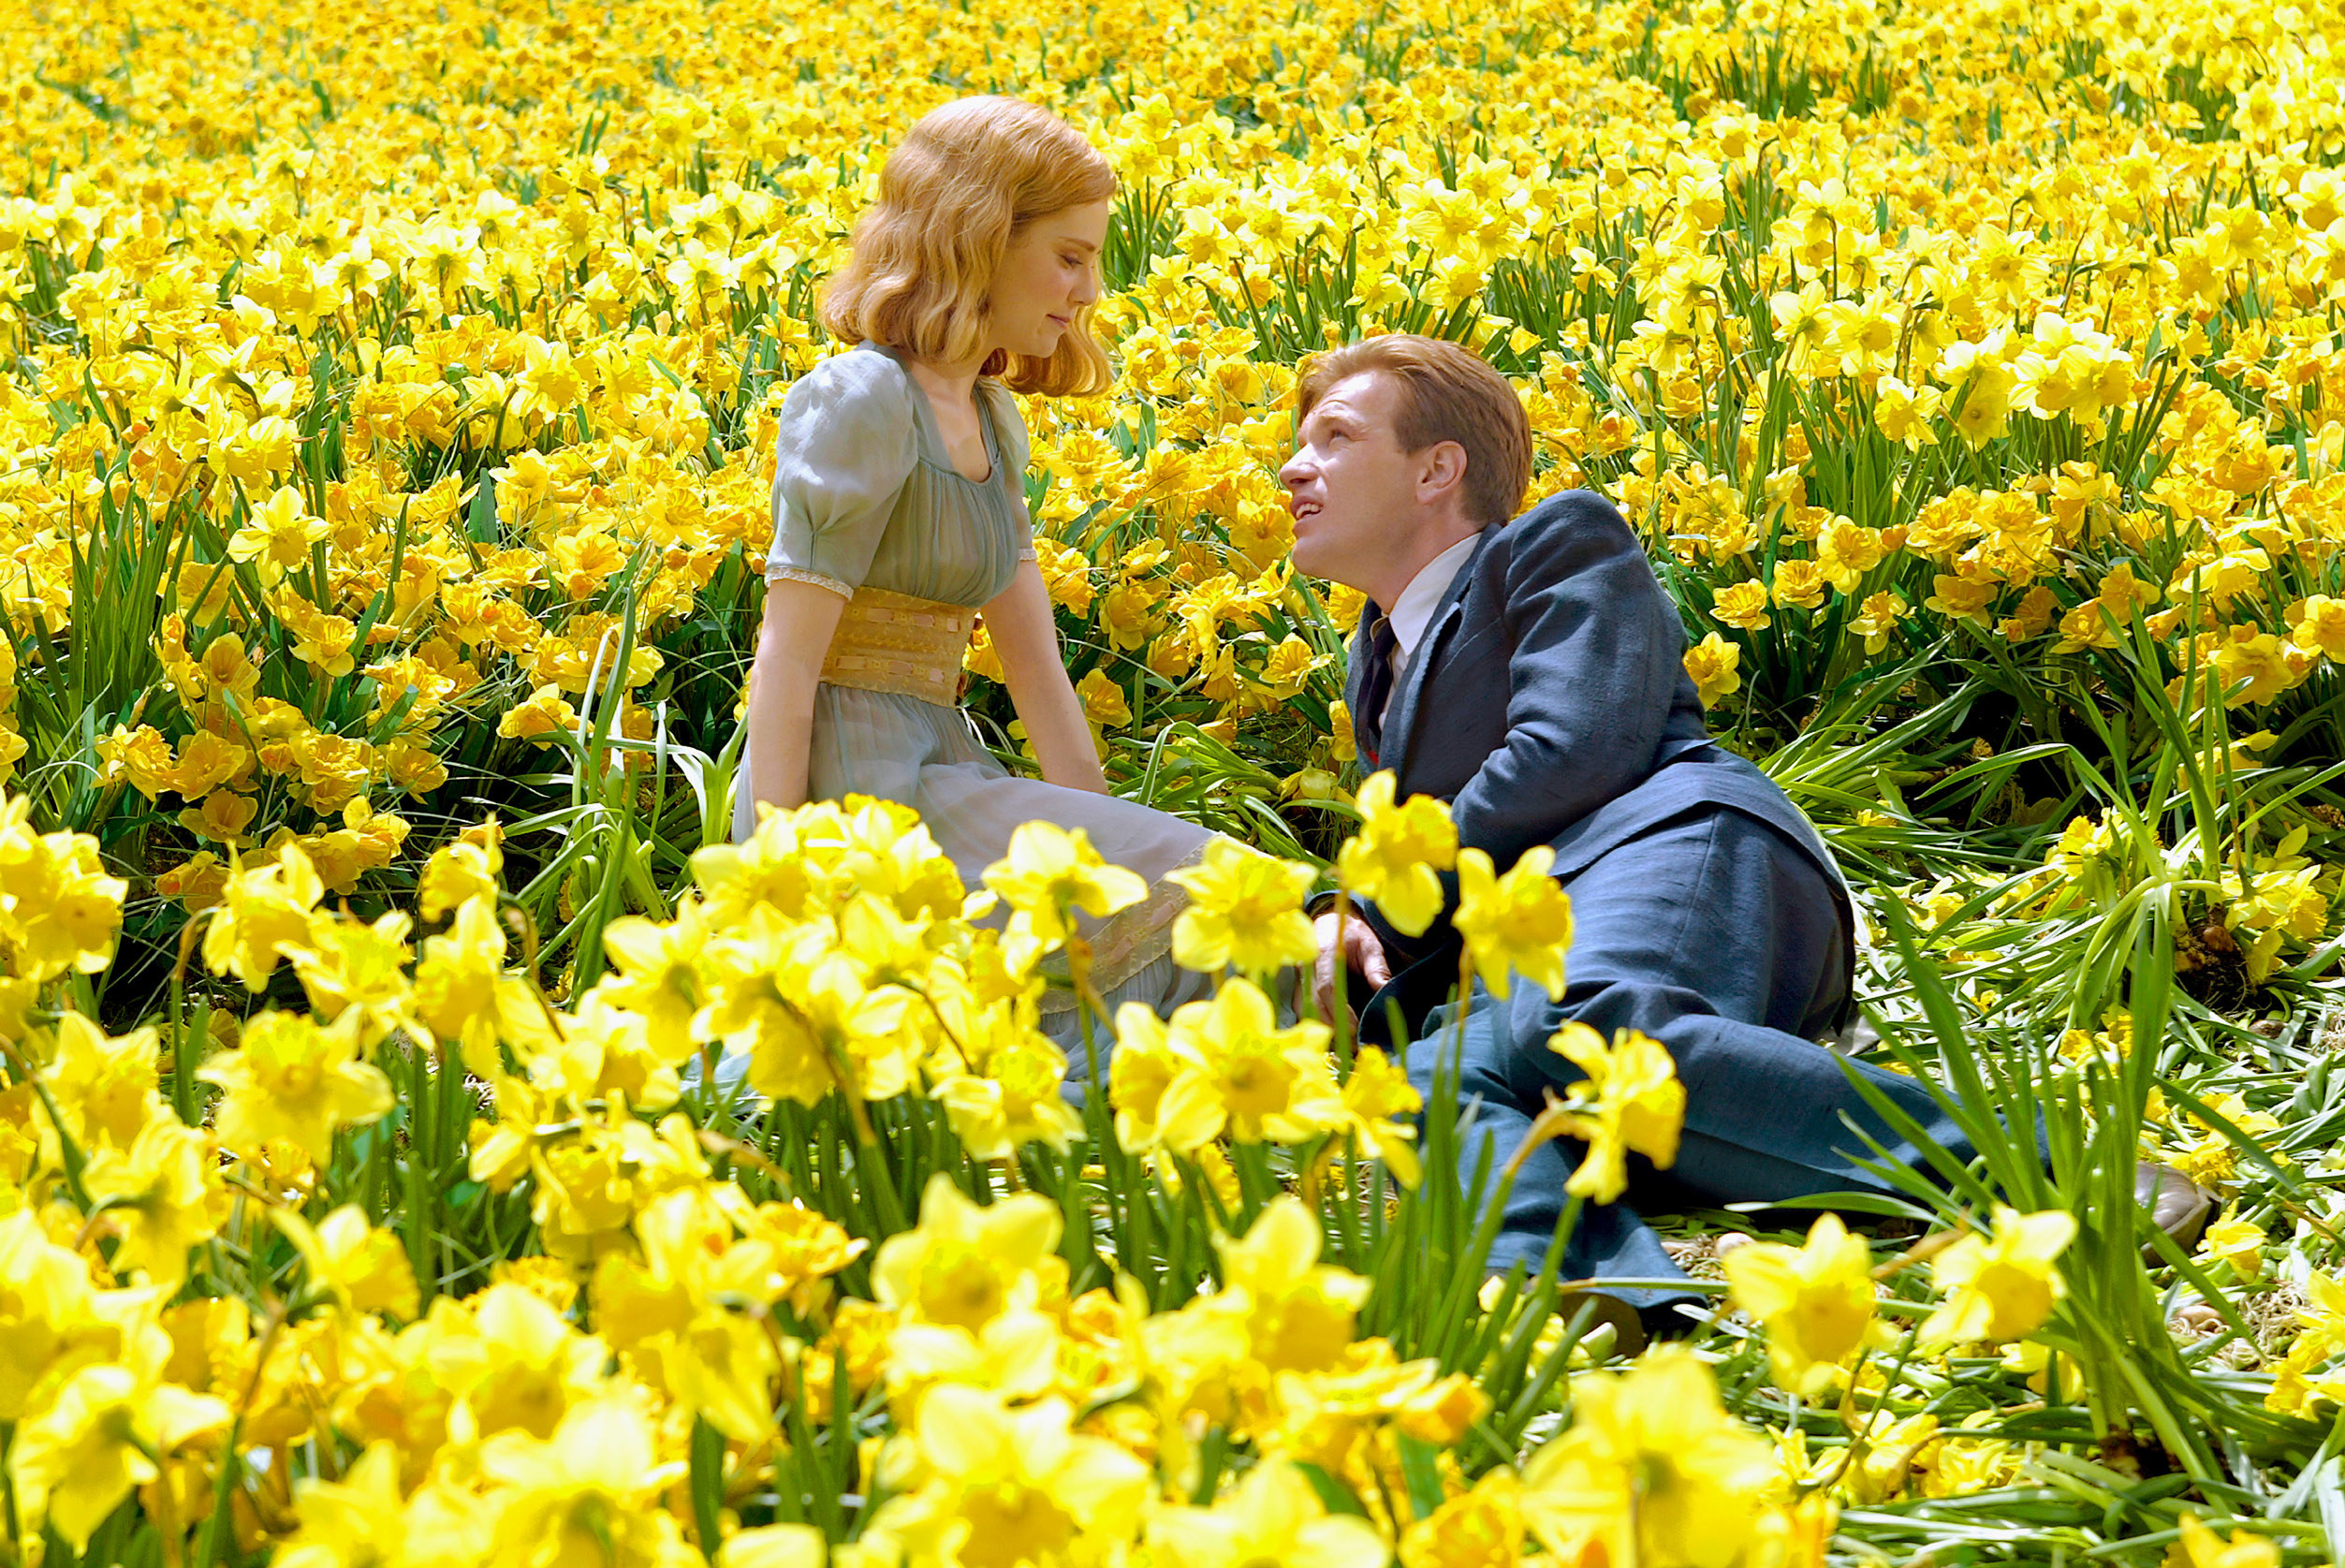 Alison Lohman, Ewan McGregor sitting in a large field of daffodil flowers